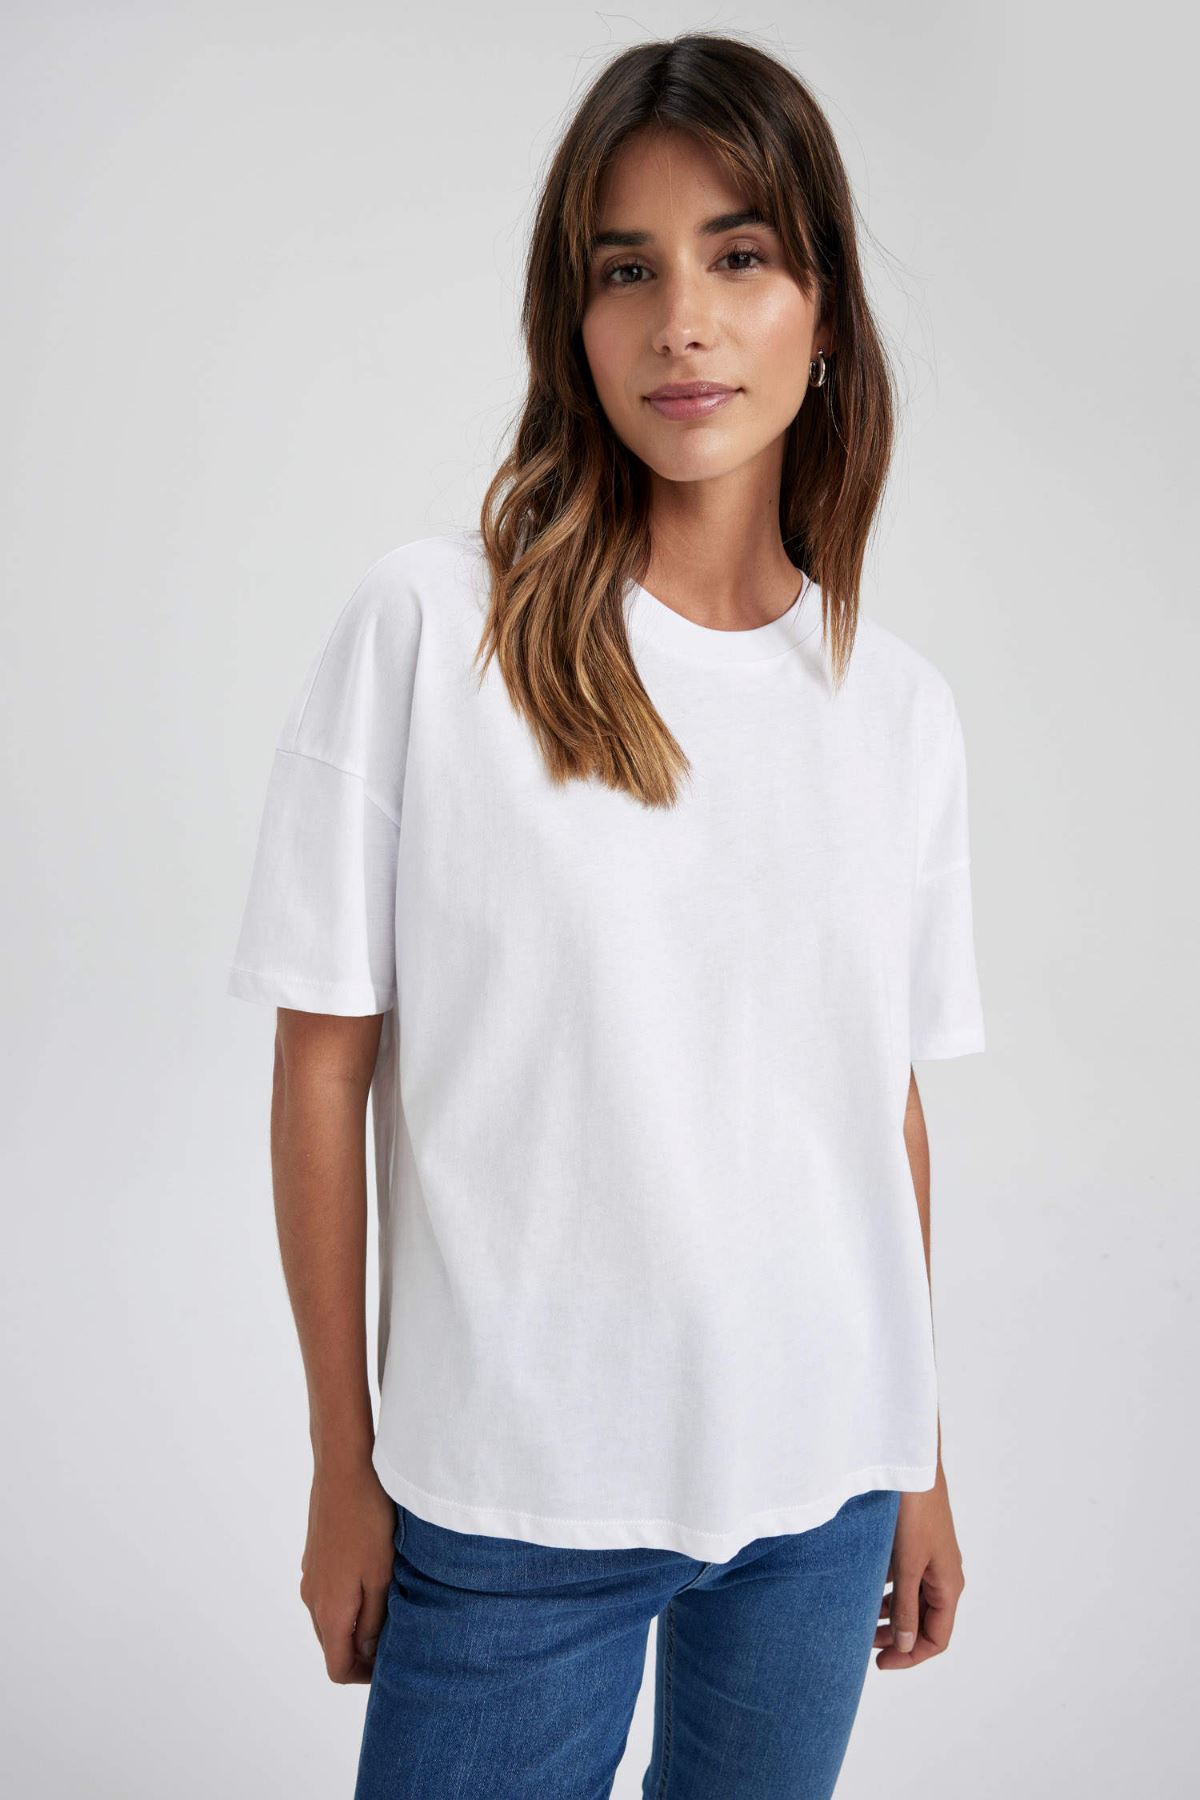 Defacto Kadın Beyaz Tişört - W9570AZ/WT34